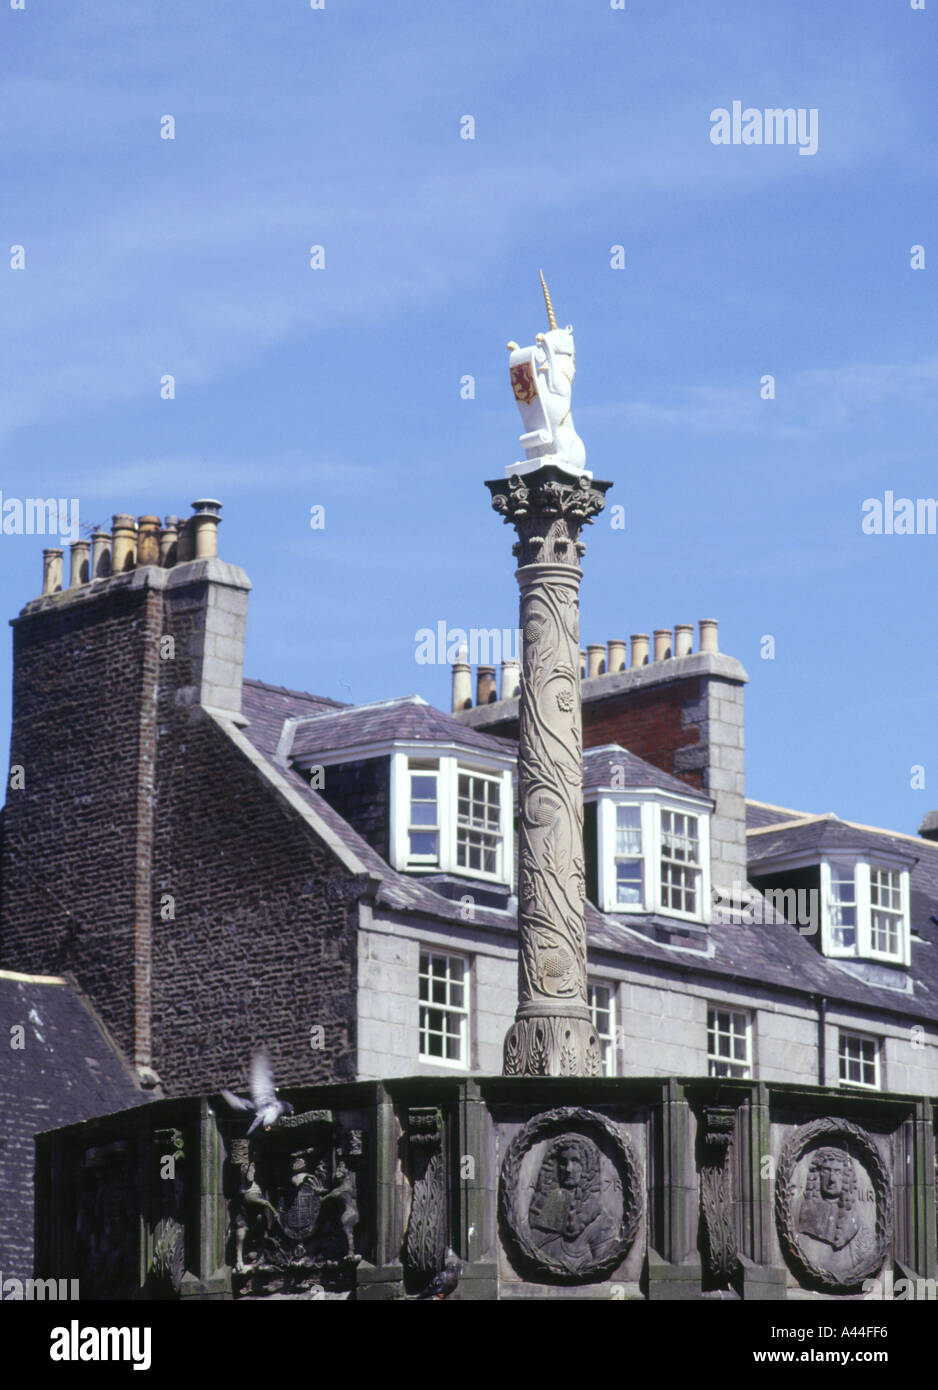 dh  UNION STREET ABERDEEN Mercat cross unicorn statue market city scotland Stock Photo